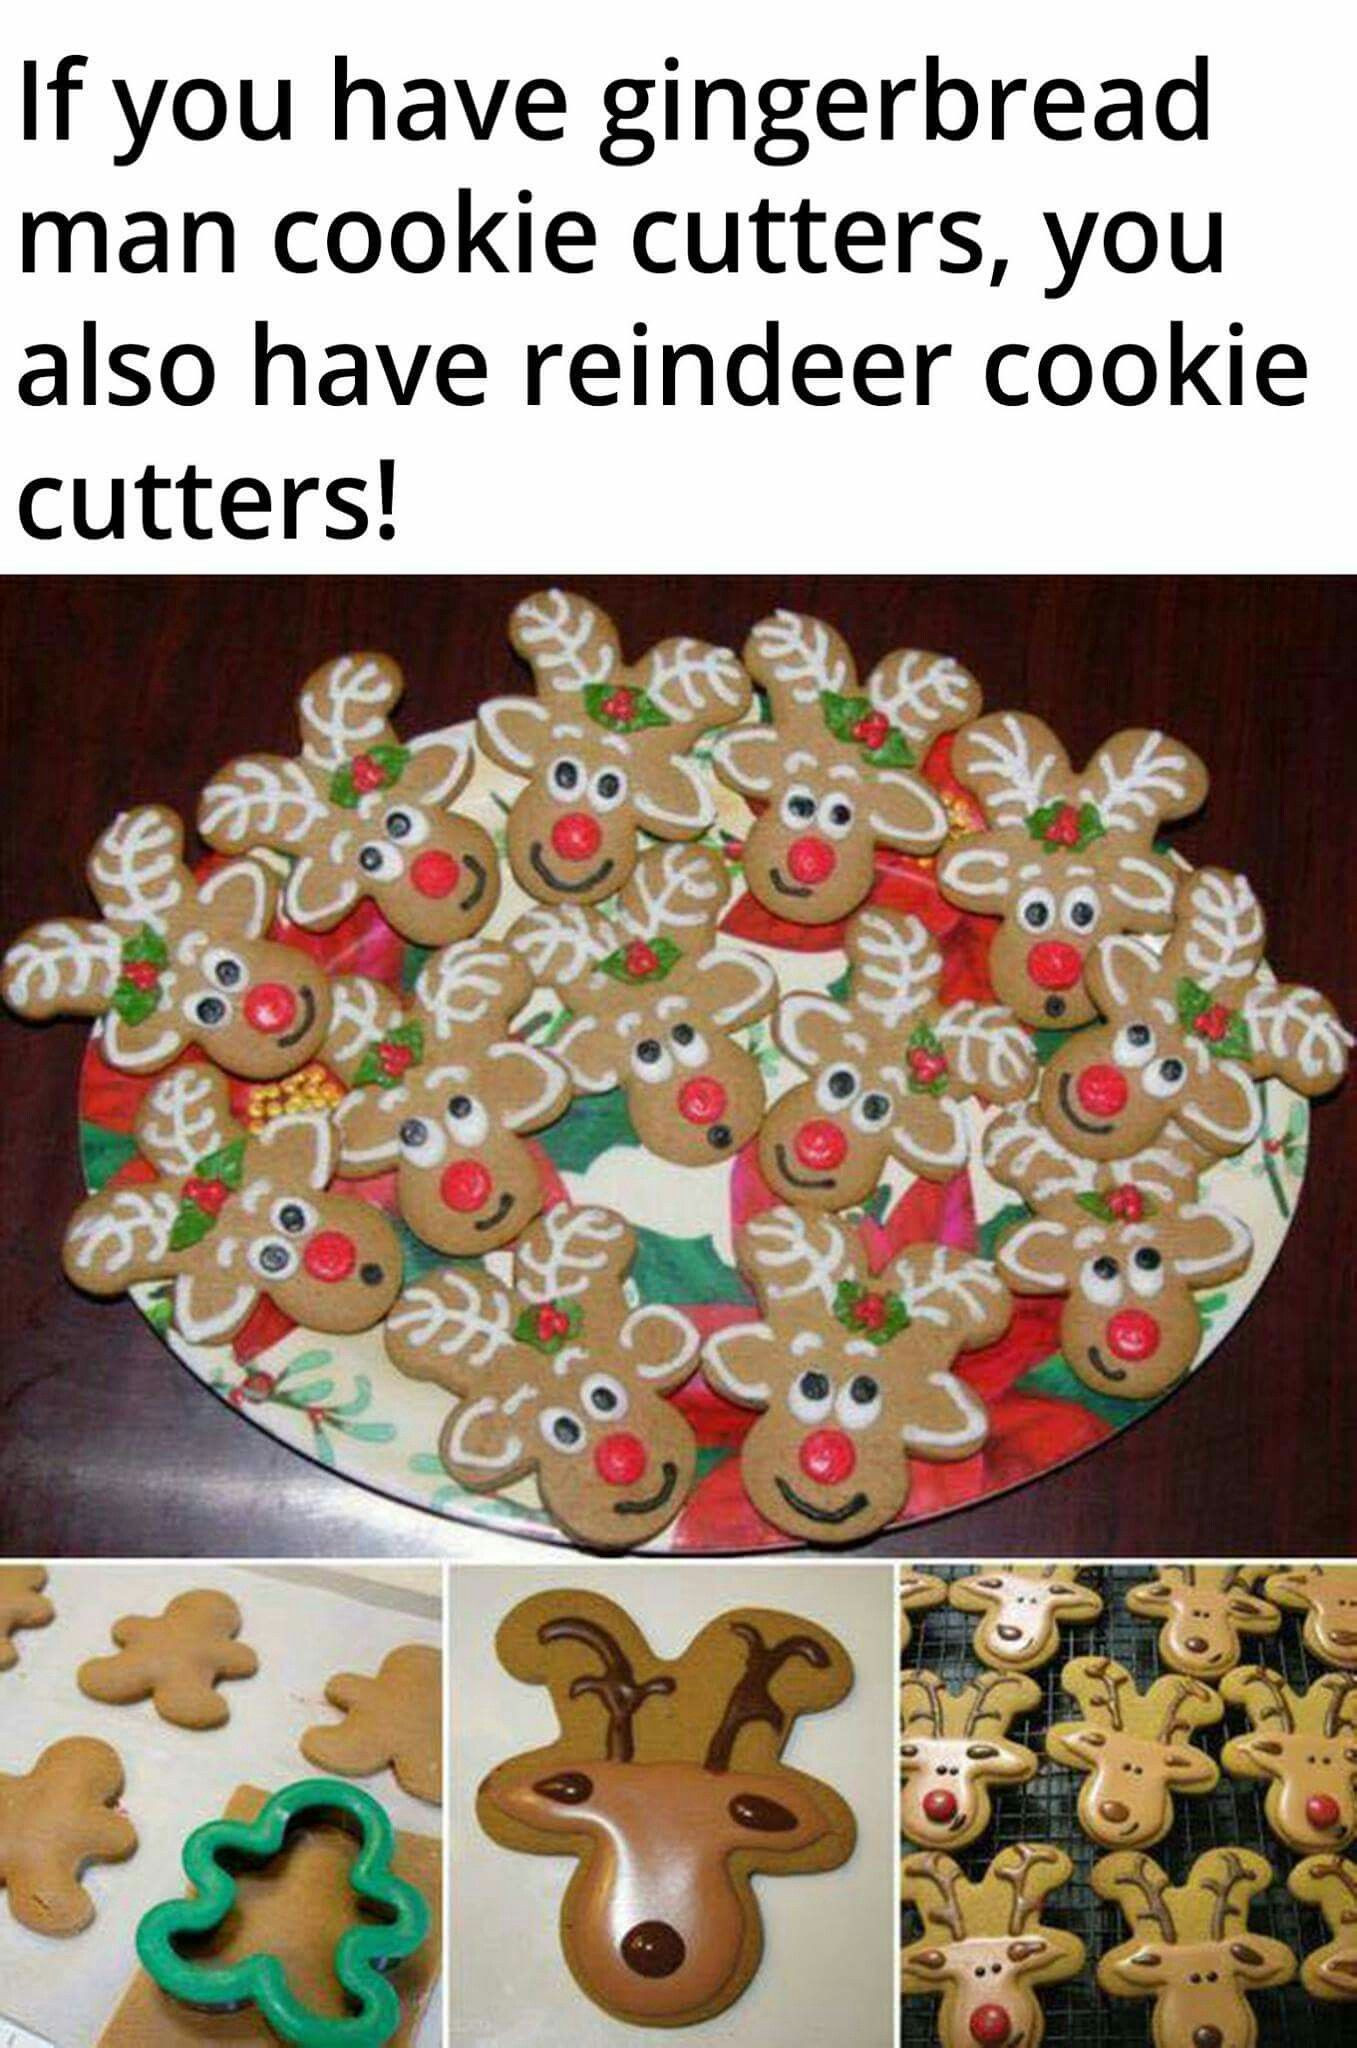 Reindeer Gingerbread Man Cookies
 Gingerbread man cutouts double as reindeer face cutouts